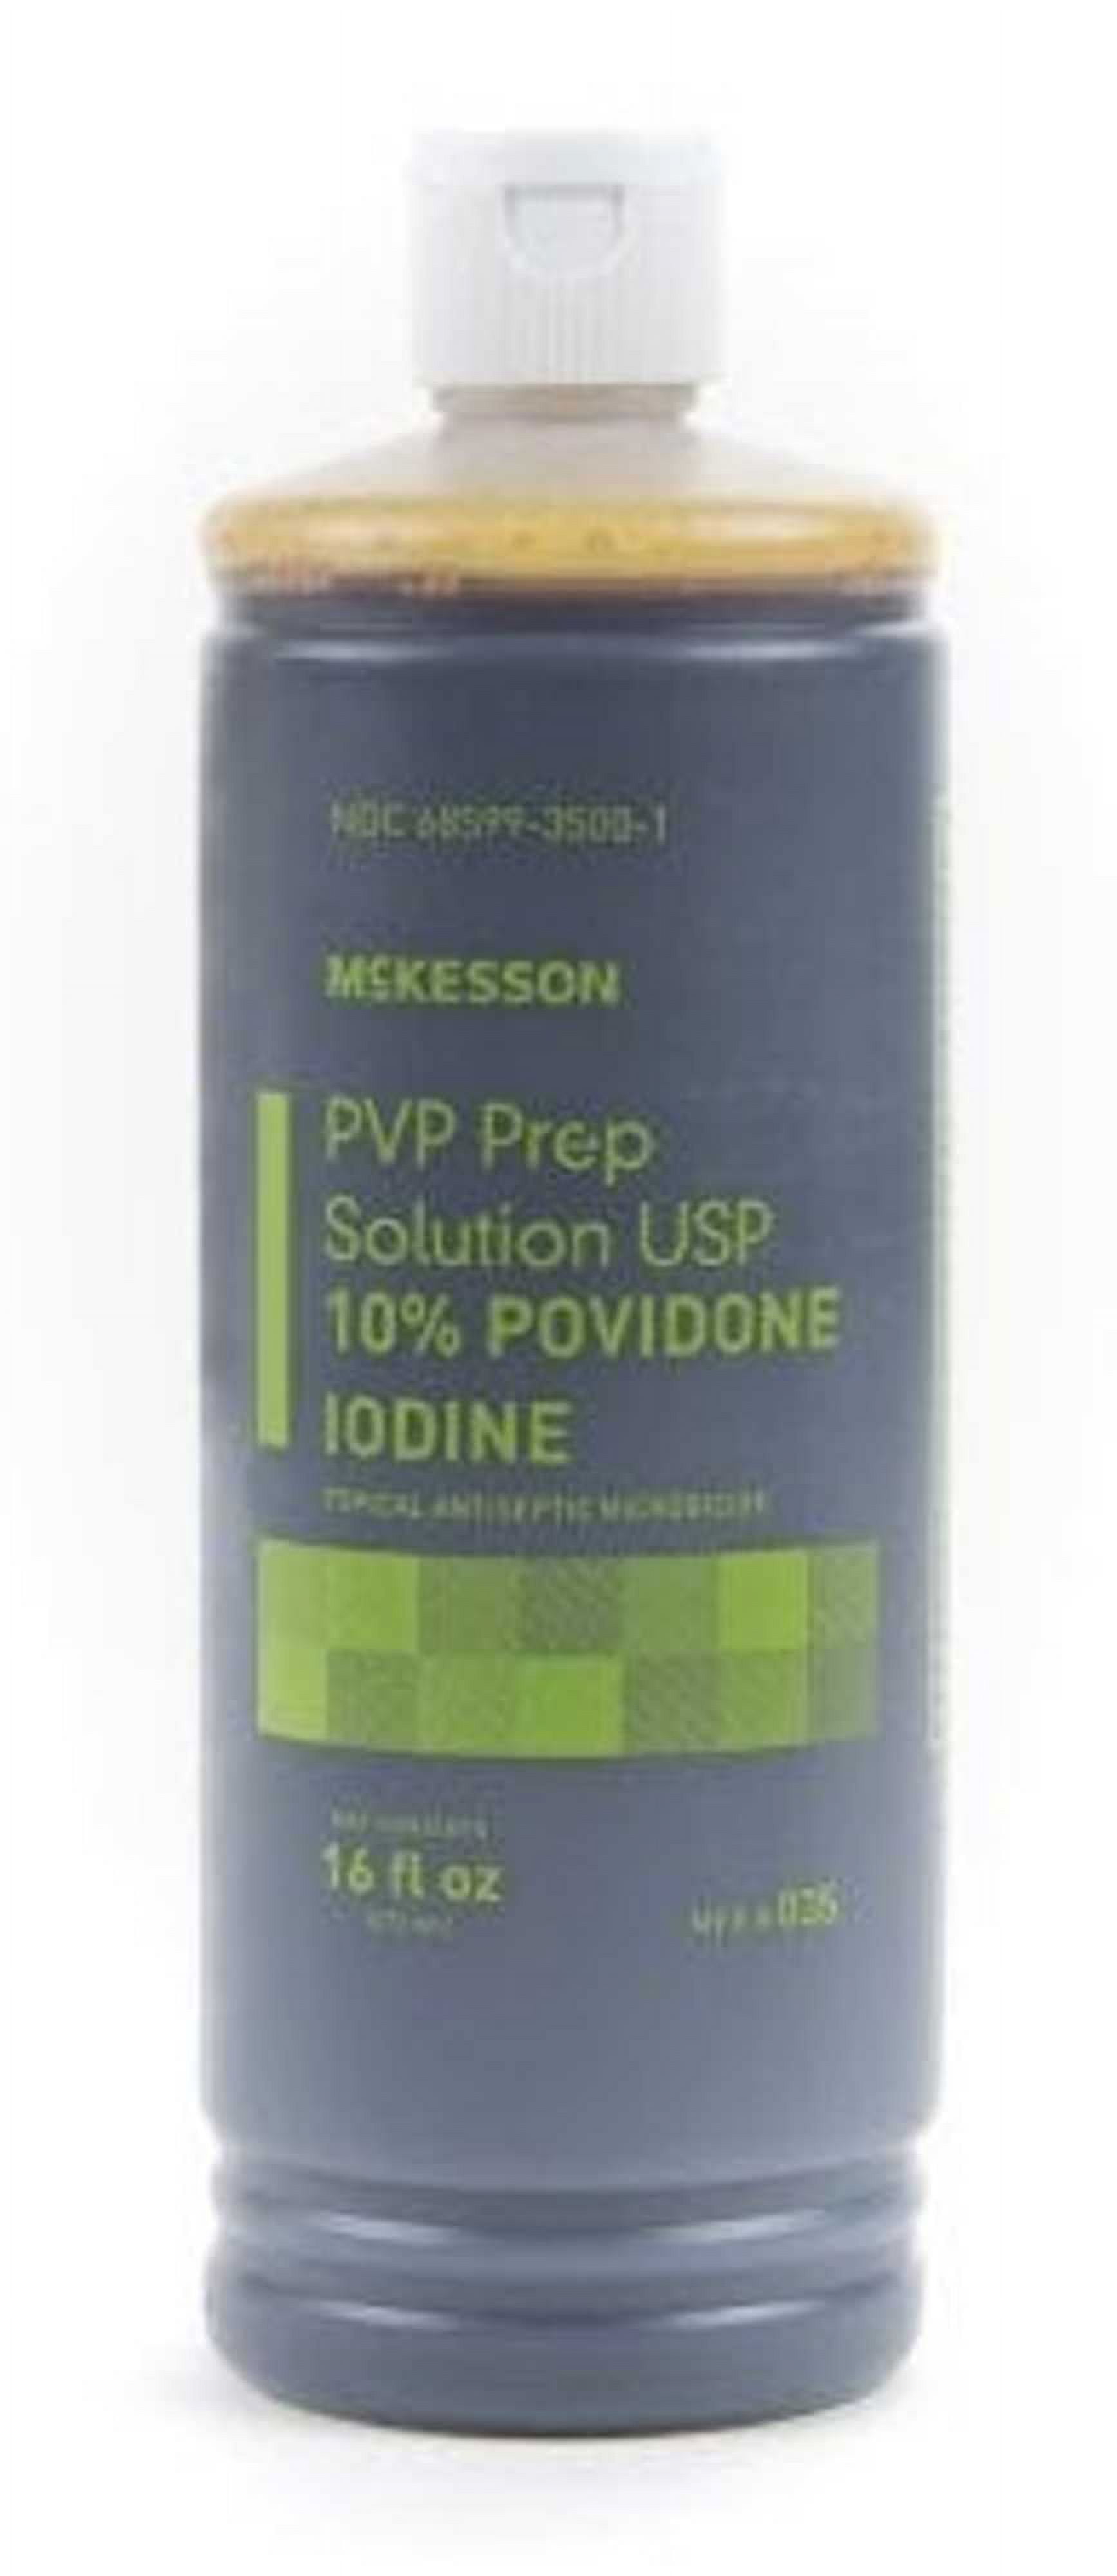  McKesson PVP Prep Solution USP, 10% Povidone-Iodine, 1 gal, 4  Count : Health & Household